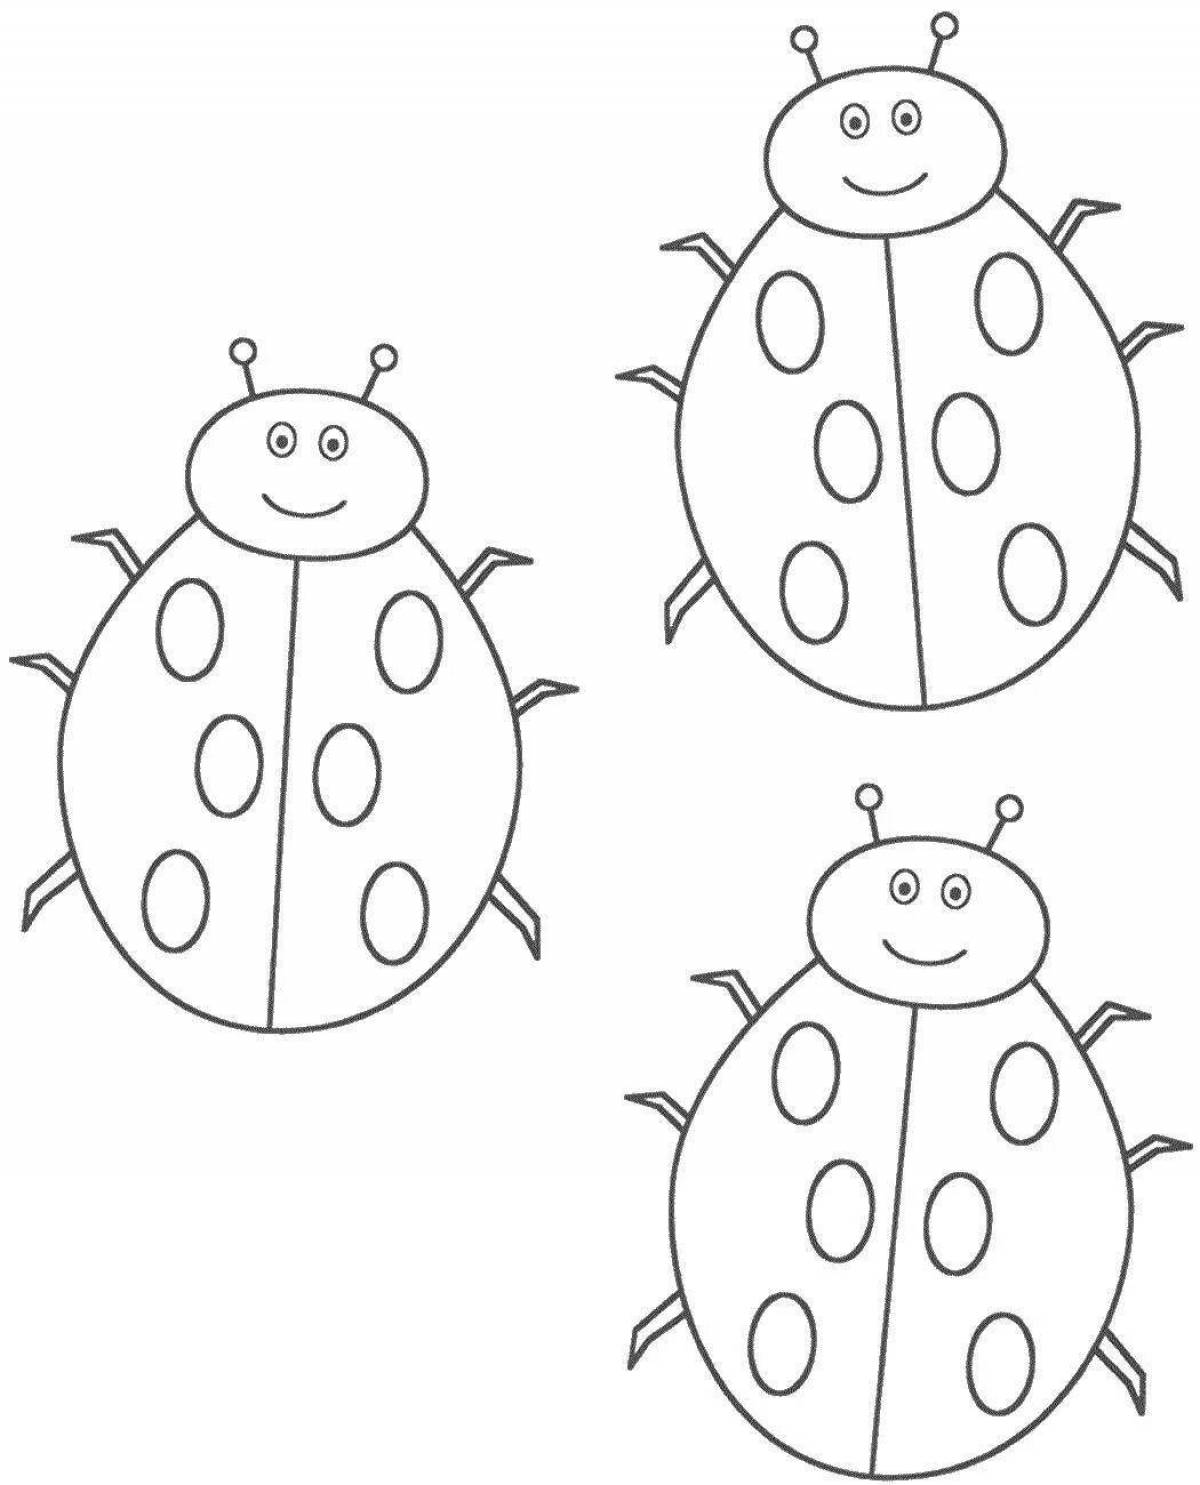 Adorable ladybug coloring page